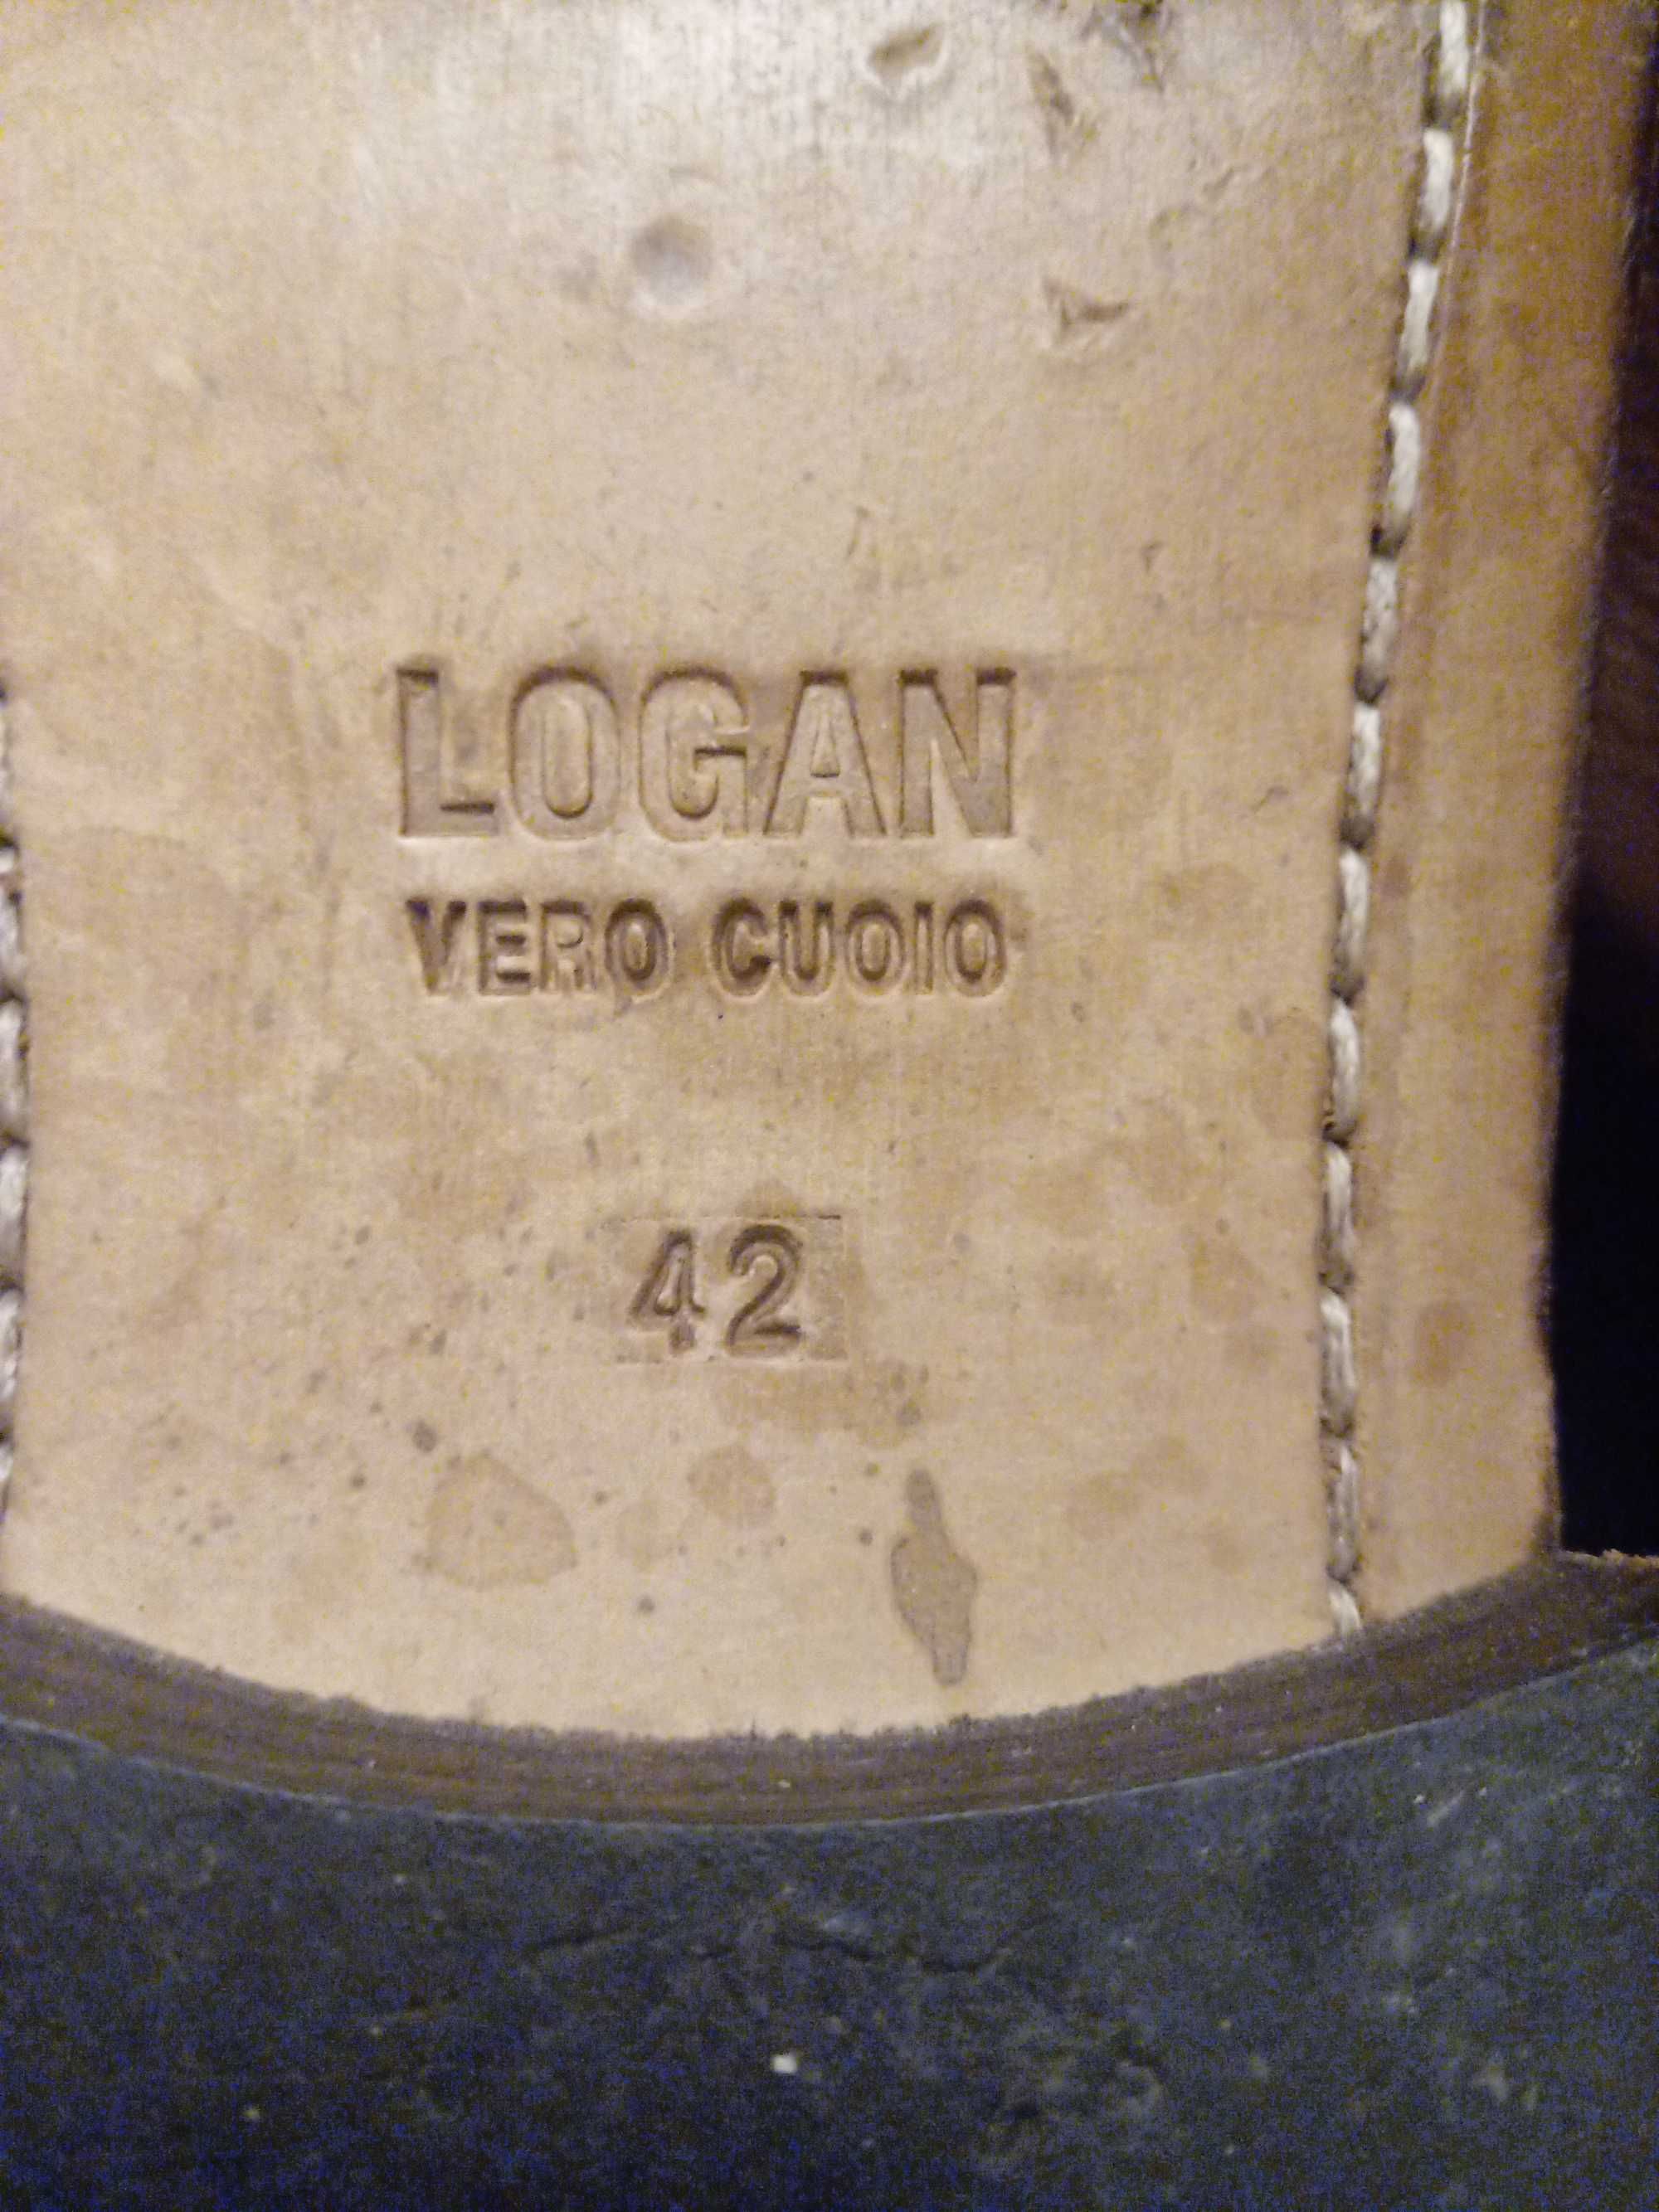 Ботинки Logan vero cuoio 42